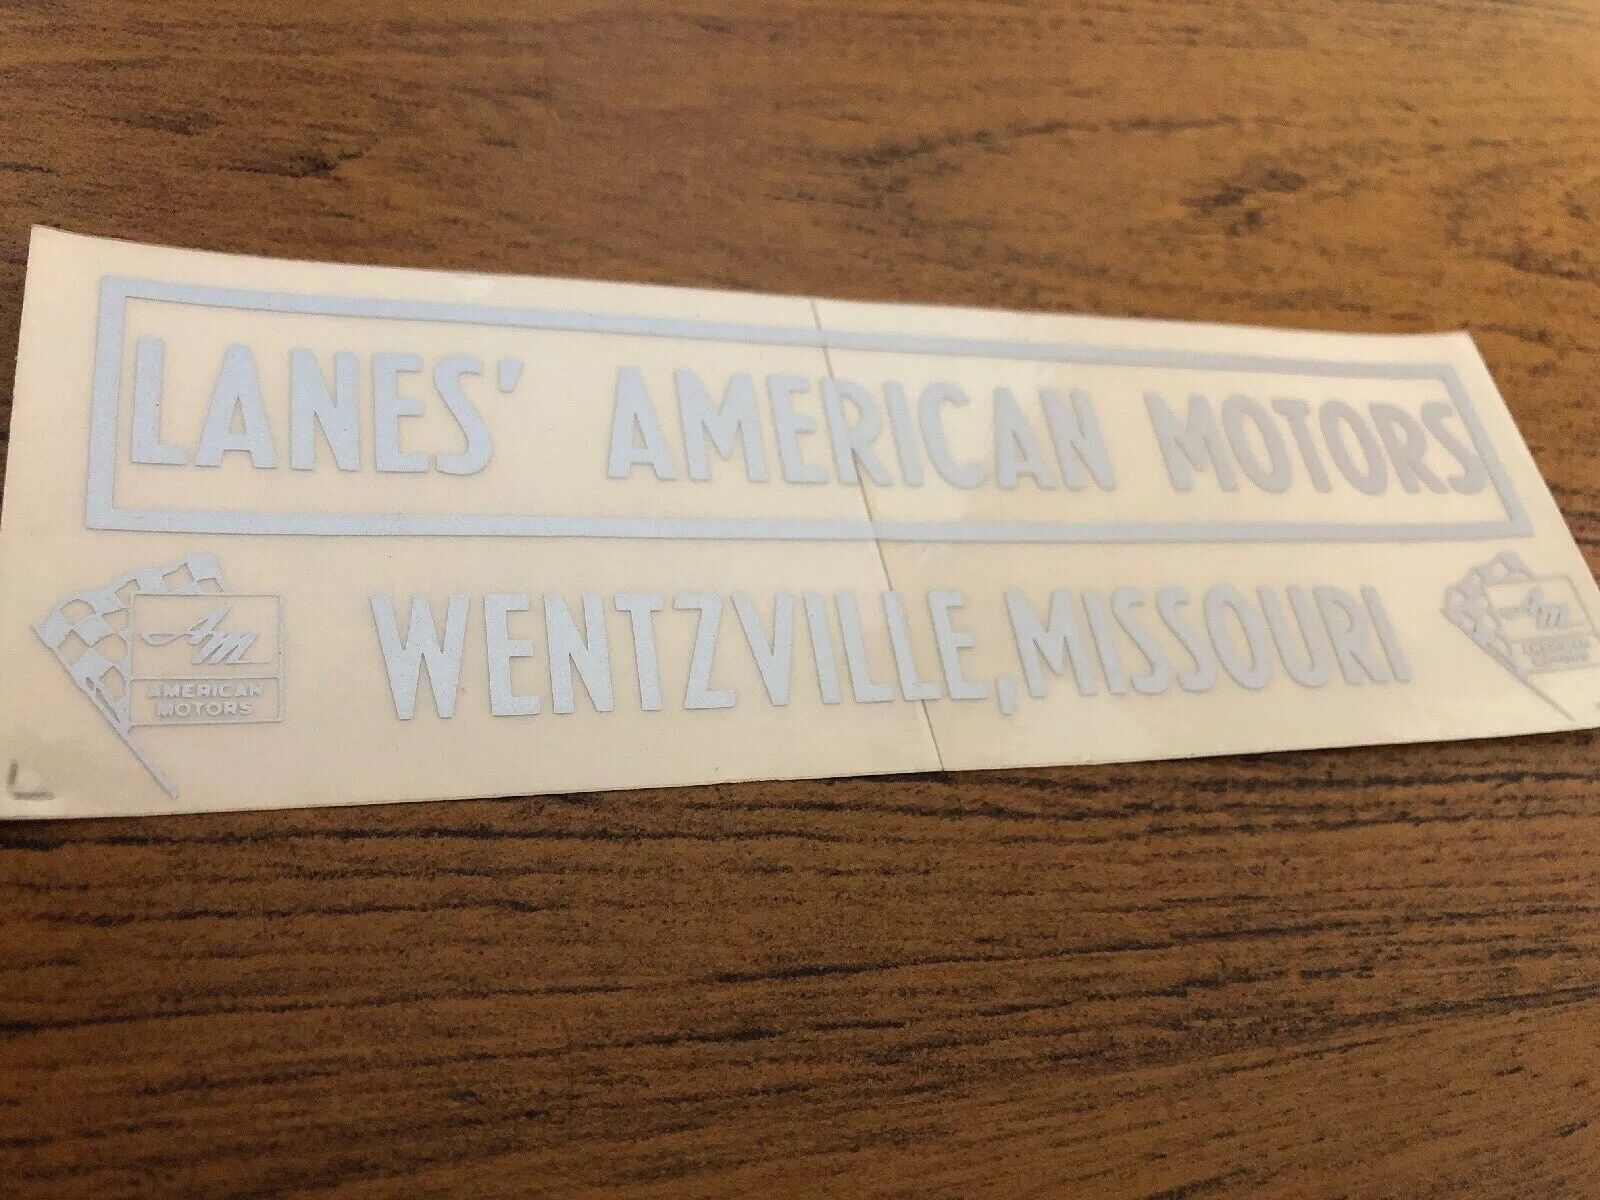 Lanes American Motors Dealer Advertising Sticker Wentzville, Missouri AMC Decal